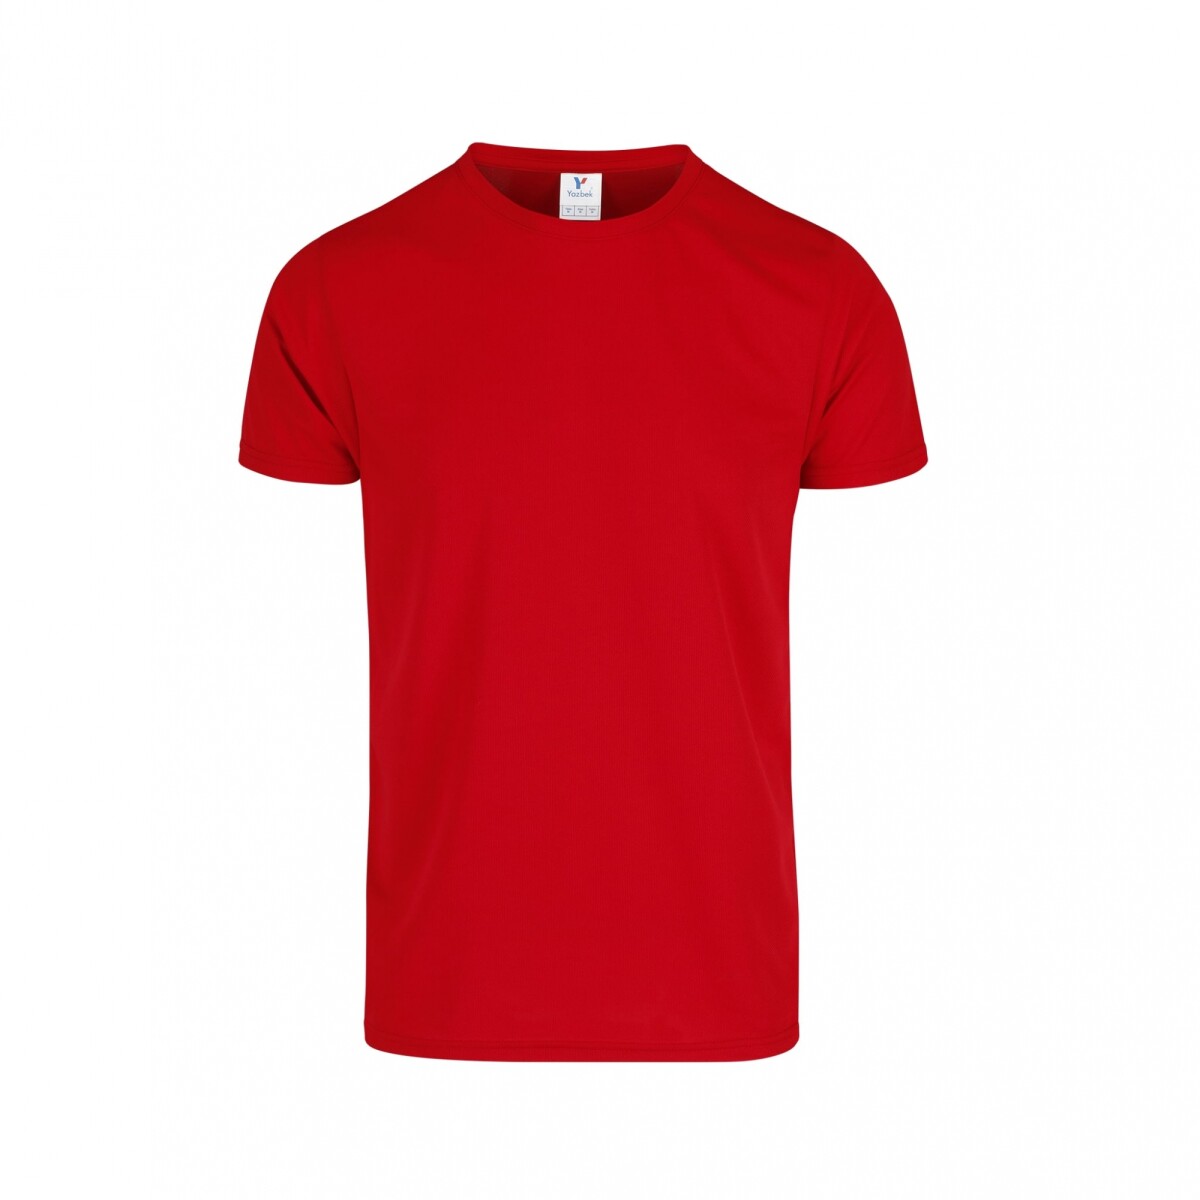 Camiseta a la base dry fit - Rojo 